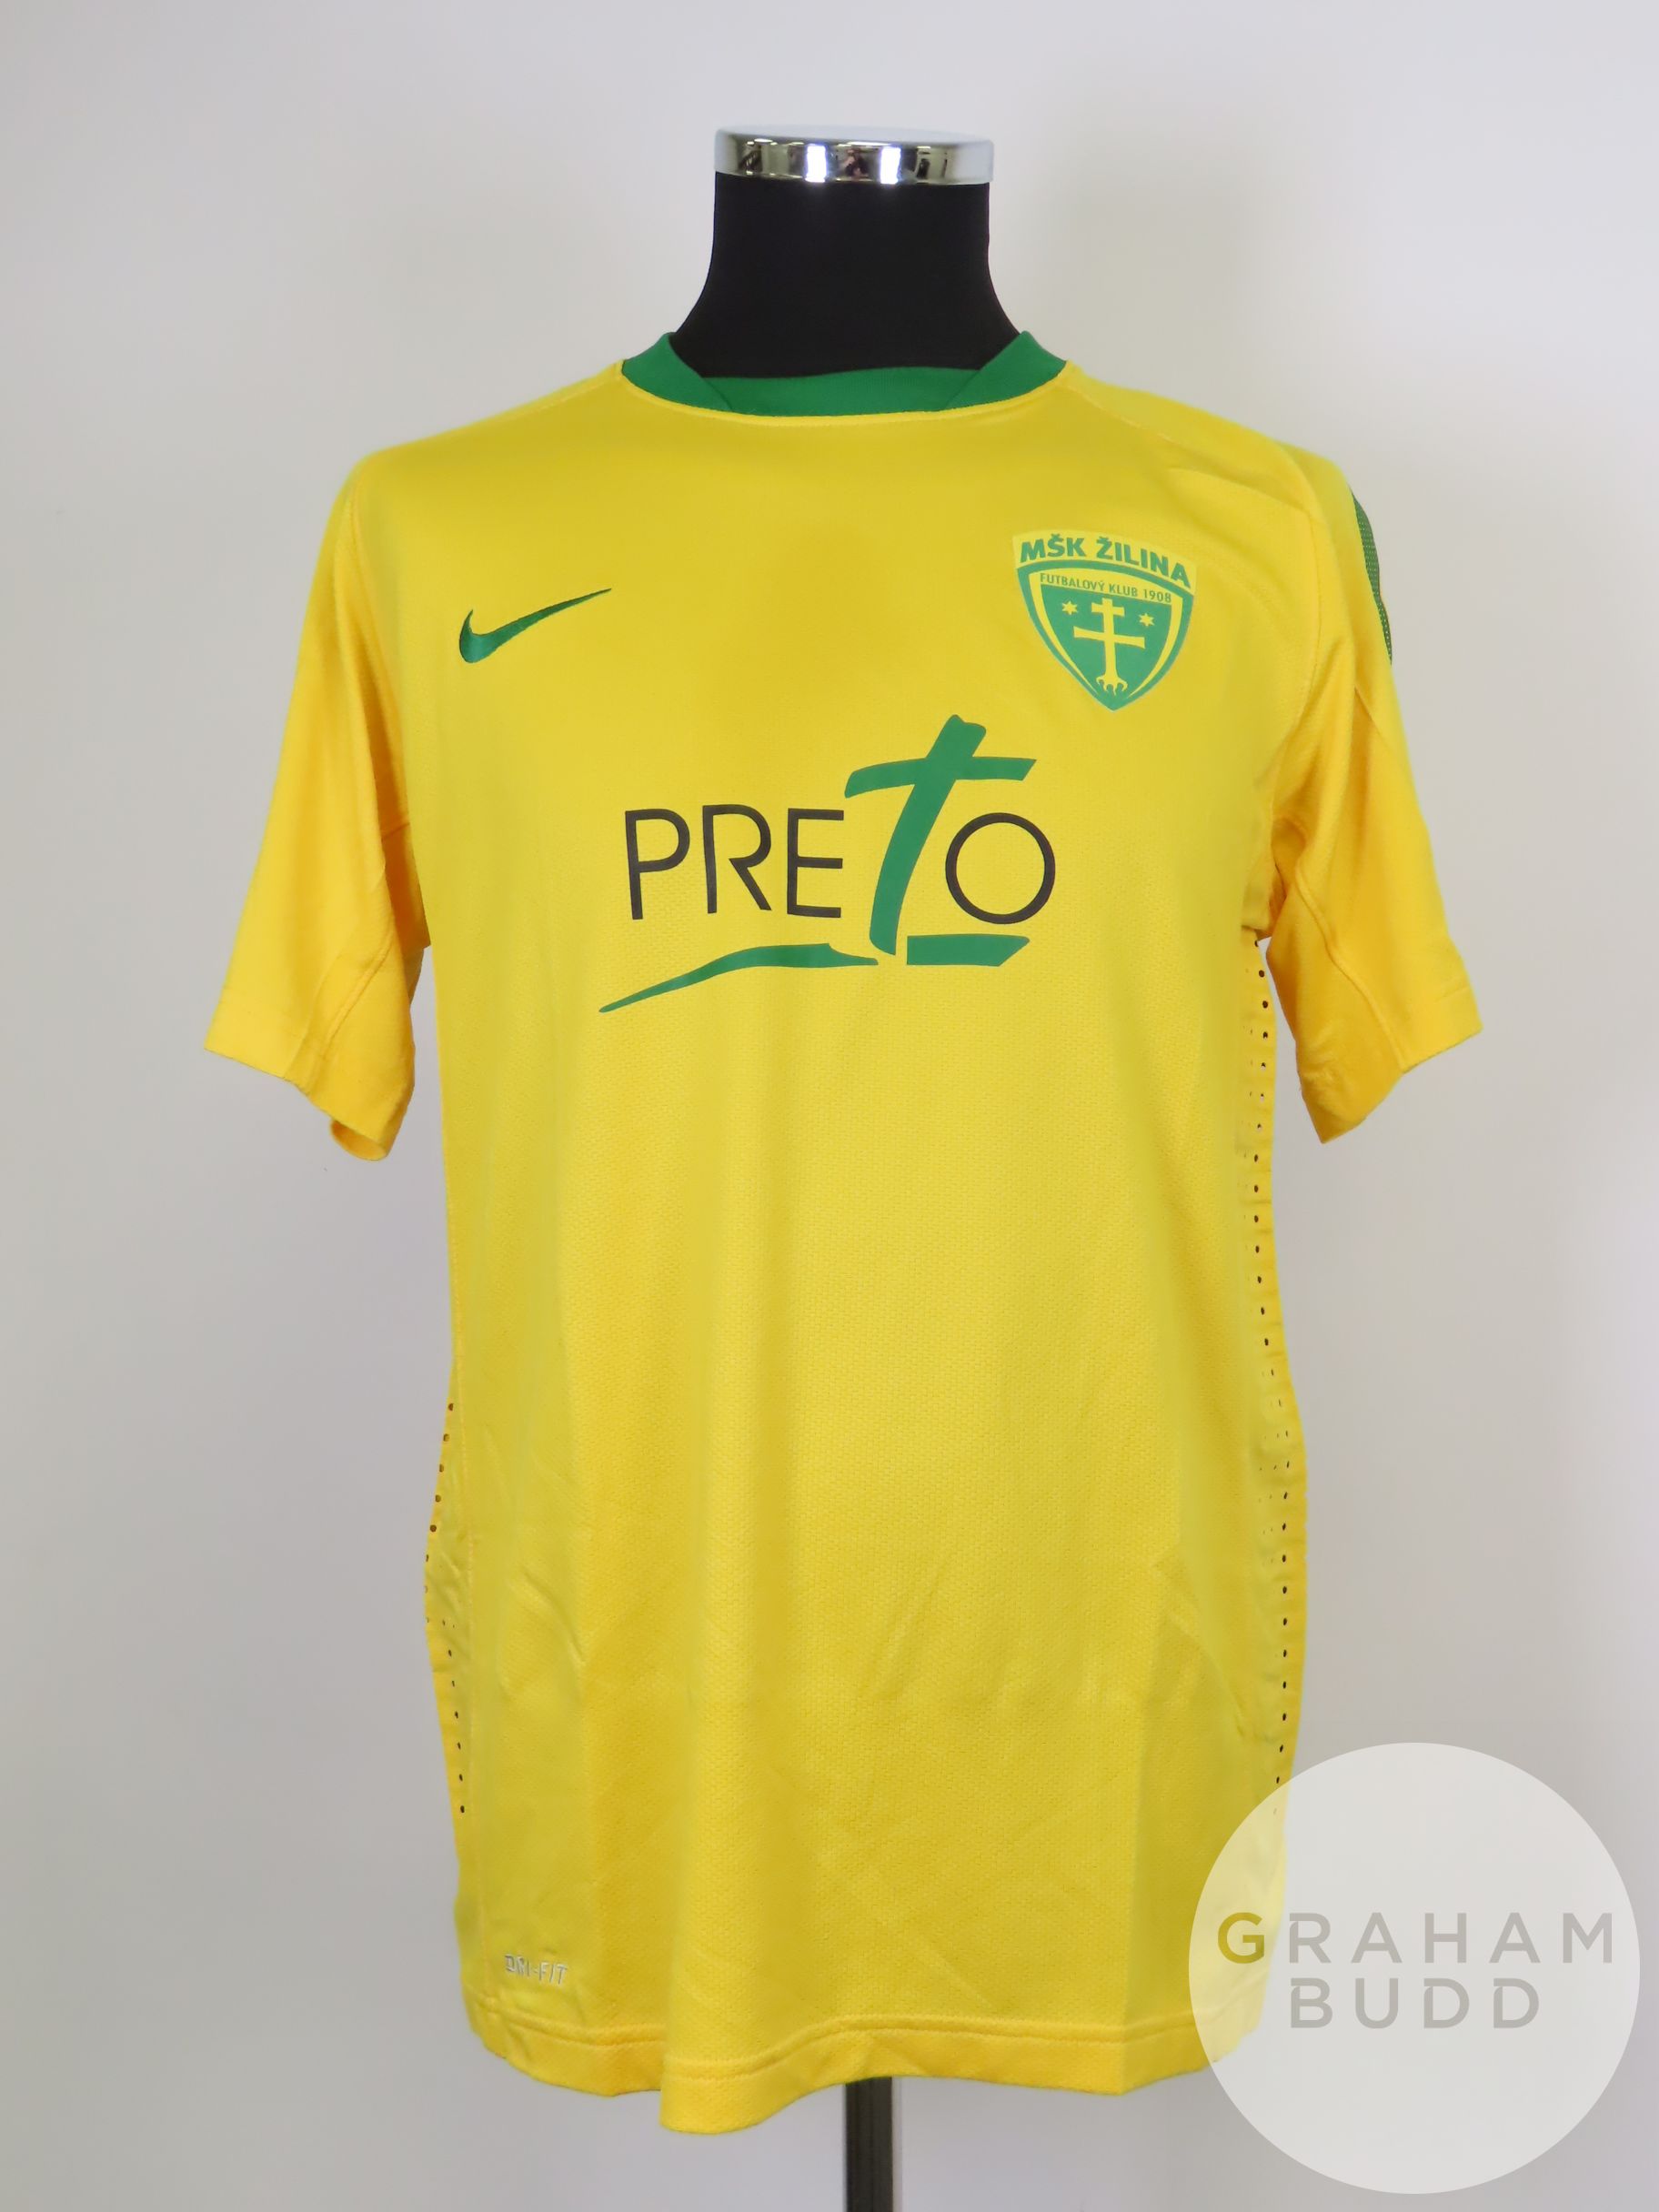 Admir Vladhavic yellow and green No.44 MSK Zilina match worn short-sleeved shirt, 2010-11